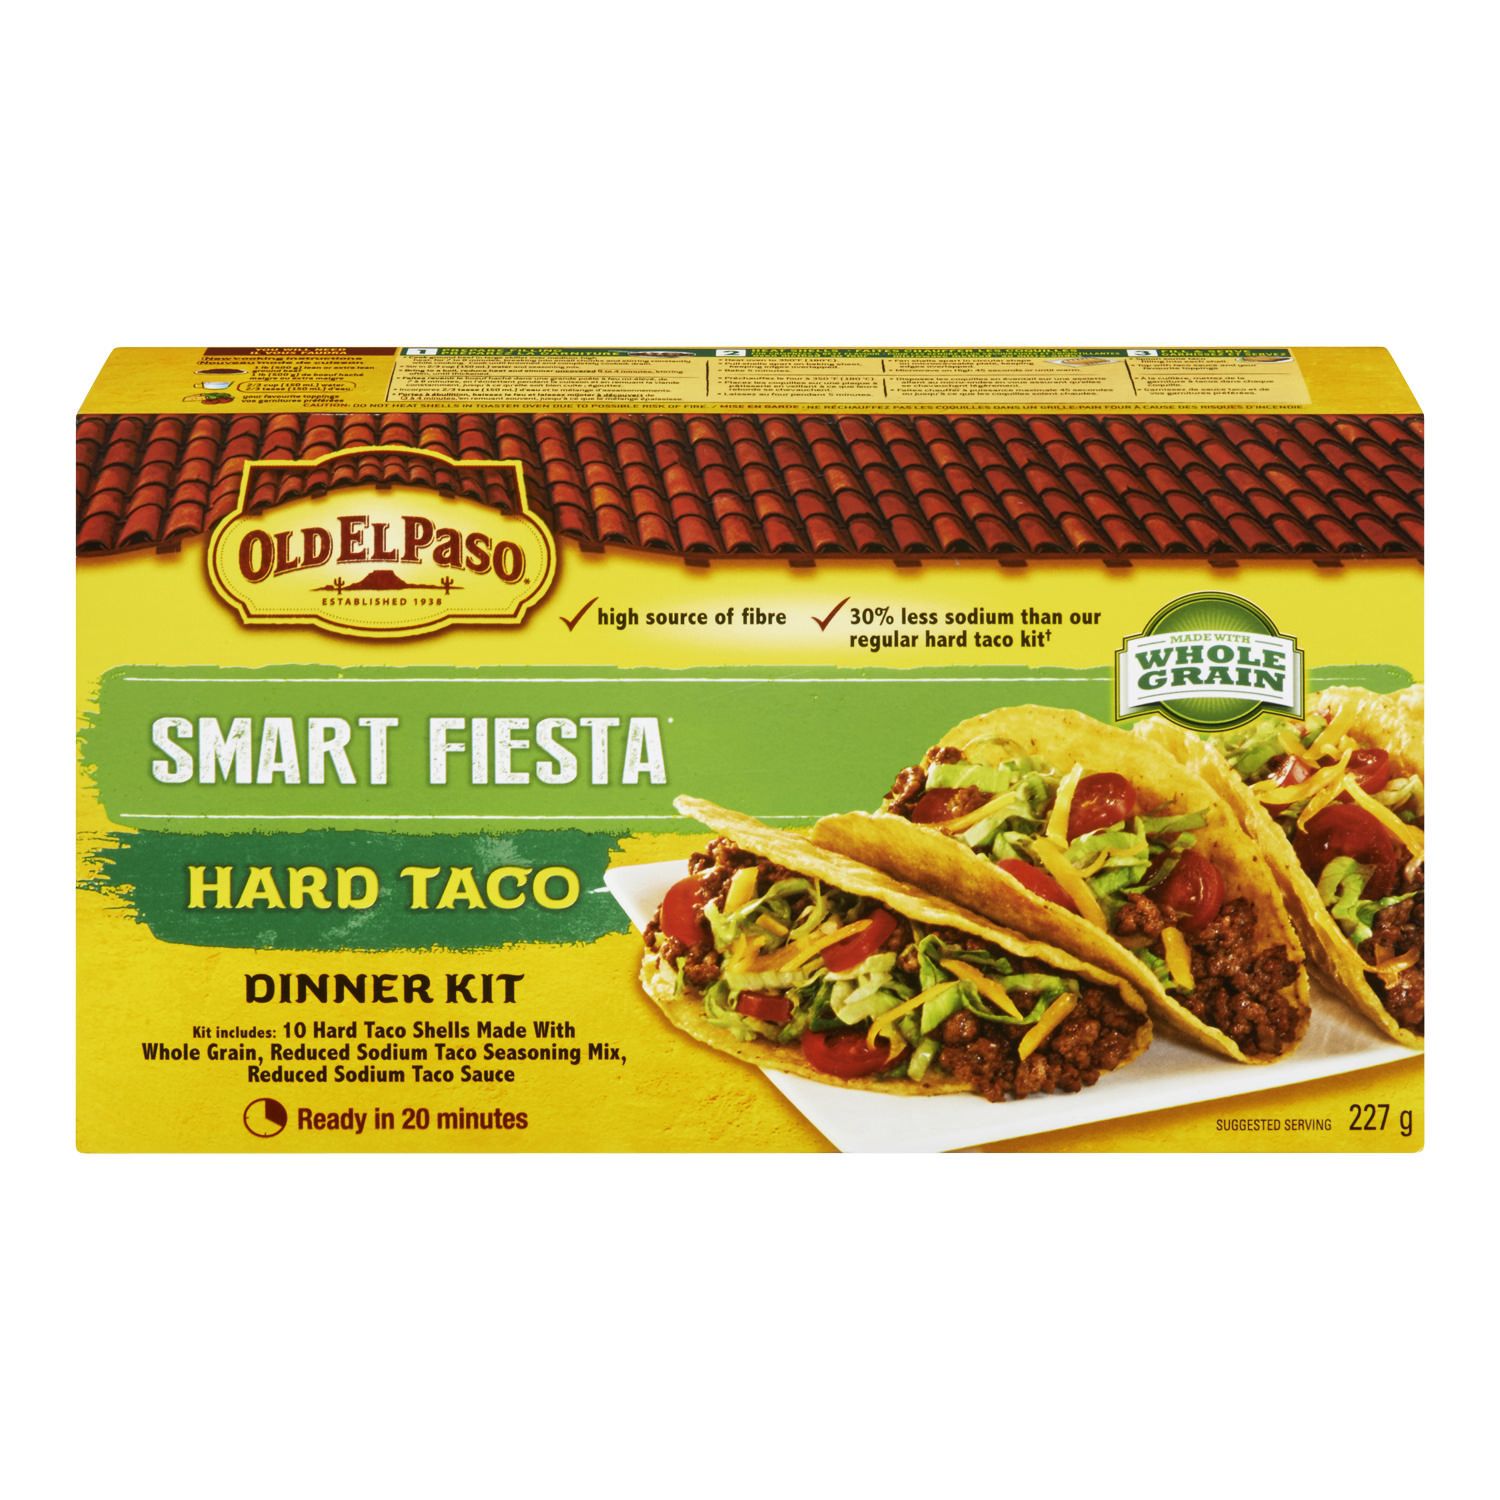 Old El Paso Smart Fiesta Hard Taco Dinner Kit Walmart Canada 1974